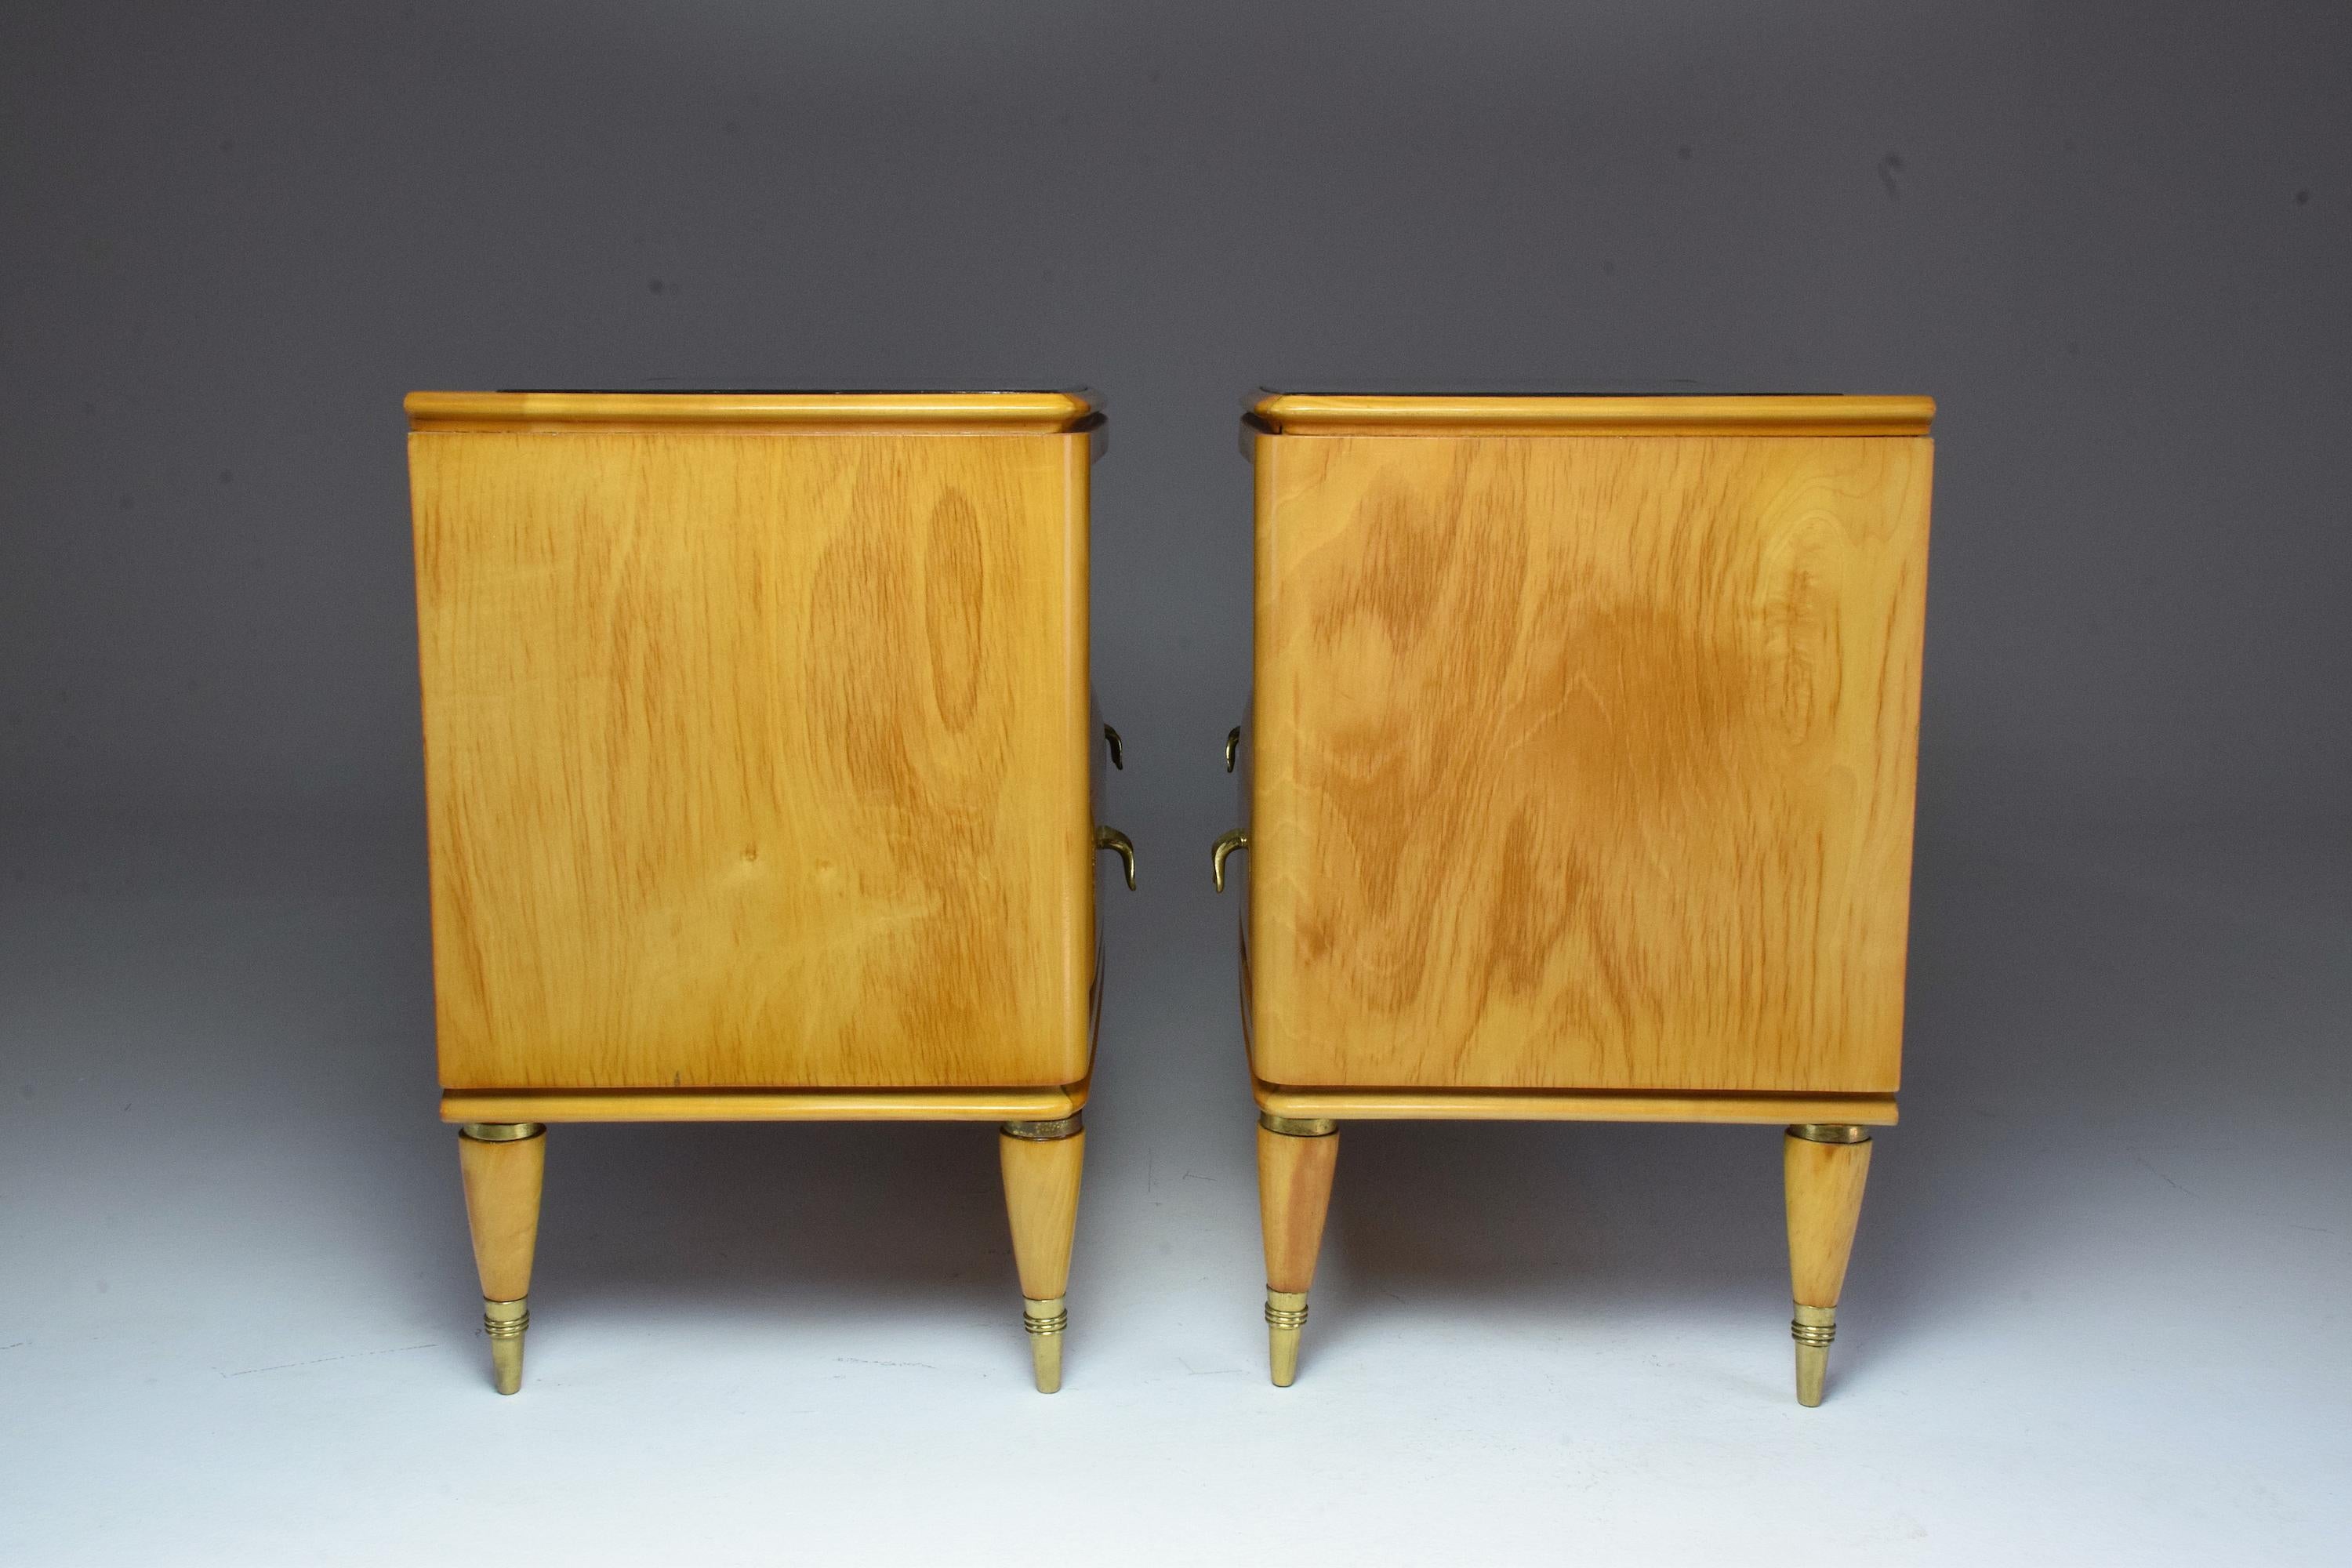 20th Century Pair of Italian Midcentury Maple Wood Nightstands, 1940s